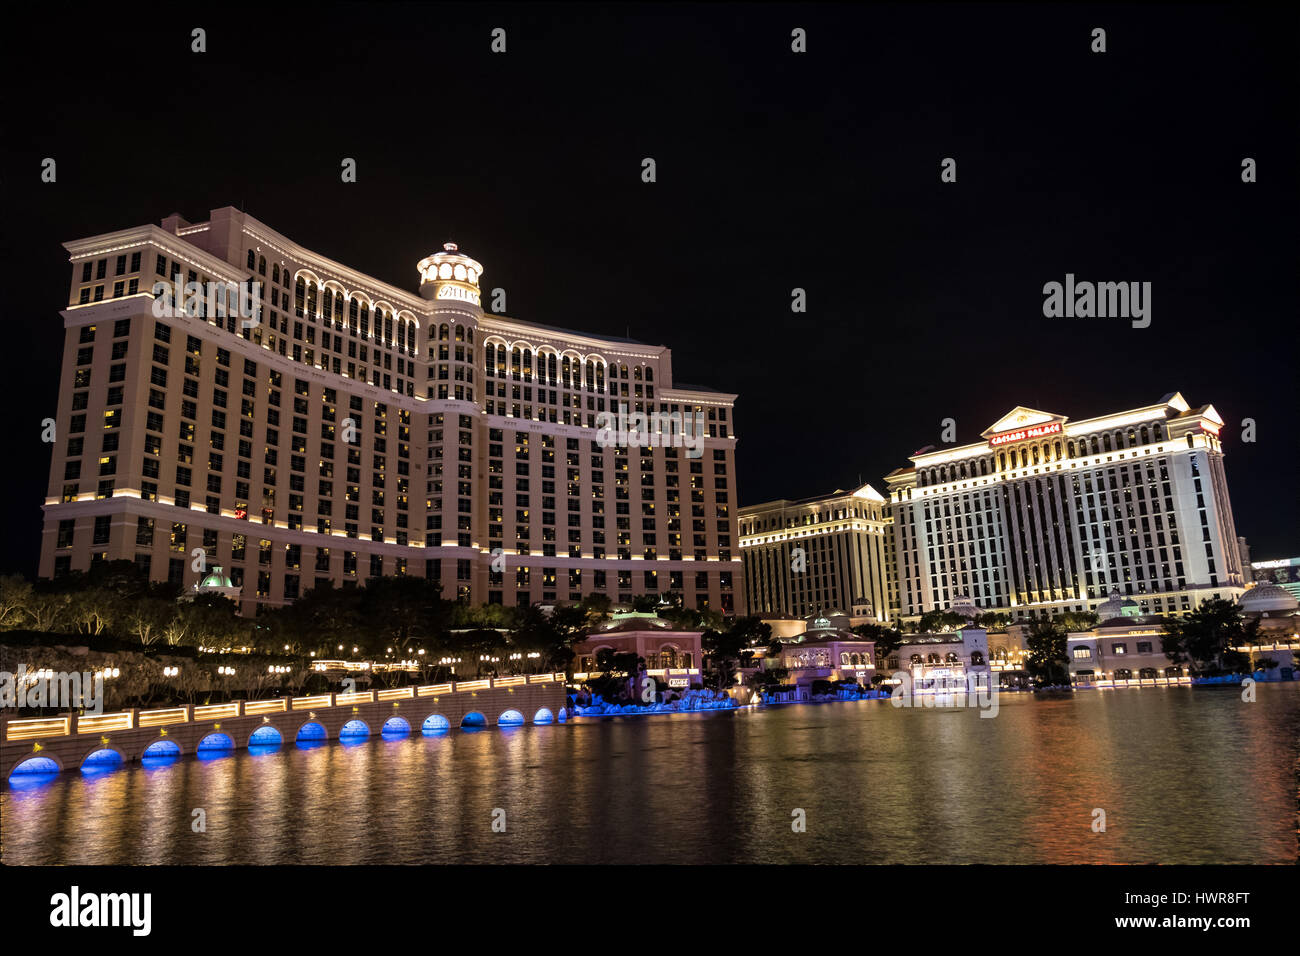 Bellagio Hotel Casino at night - Las Vegas, Nevada, USA Stock Photo